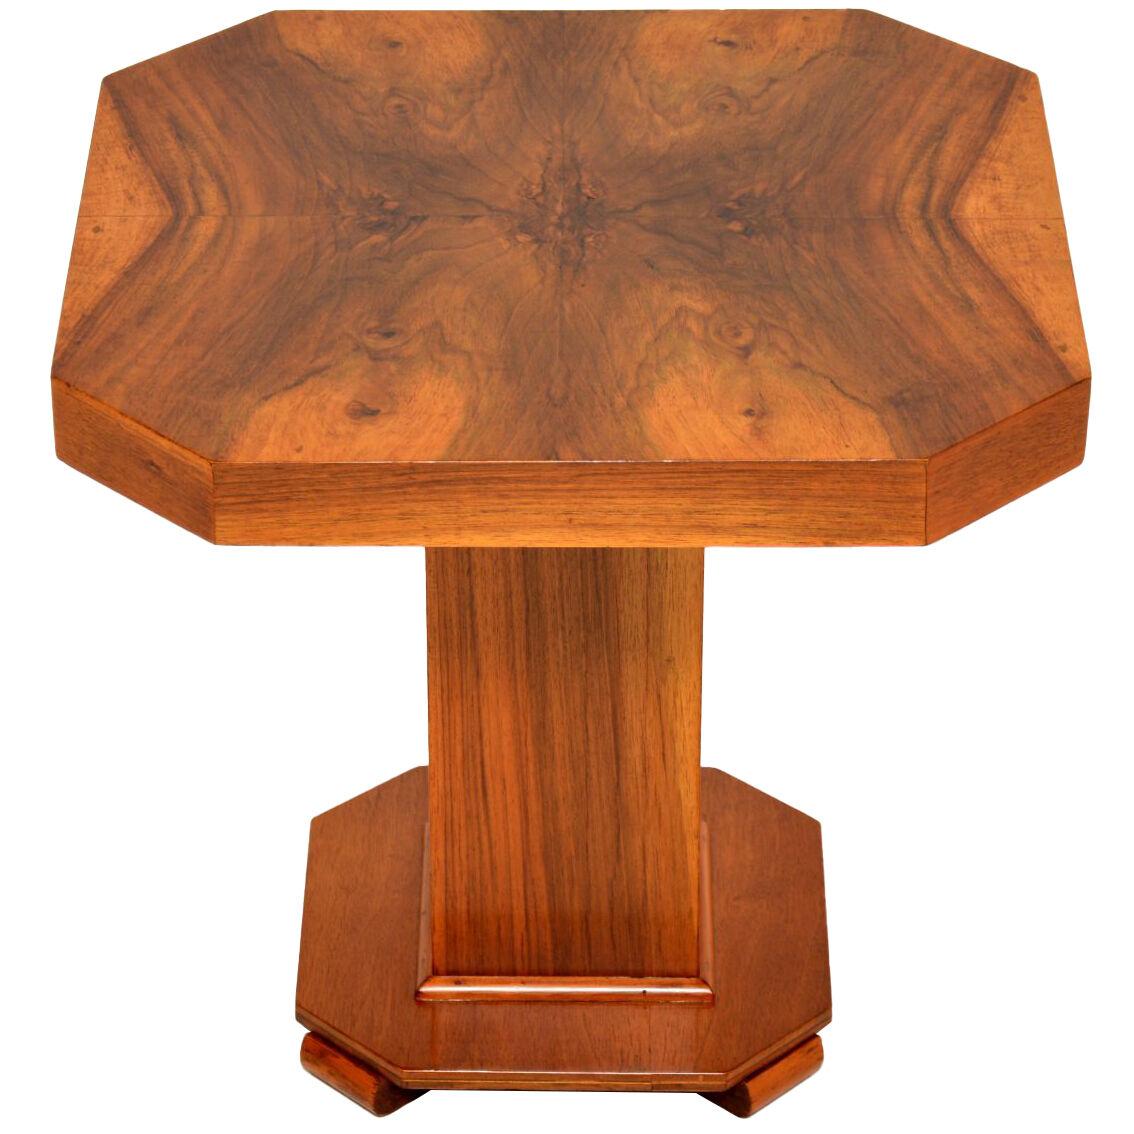 1930's Art Deco Figured Walnut Occasional Coffee / Side Table